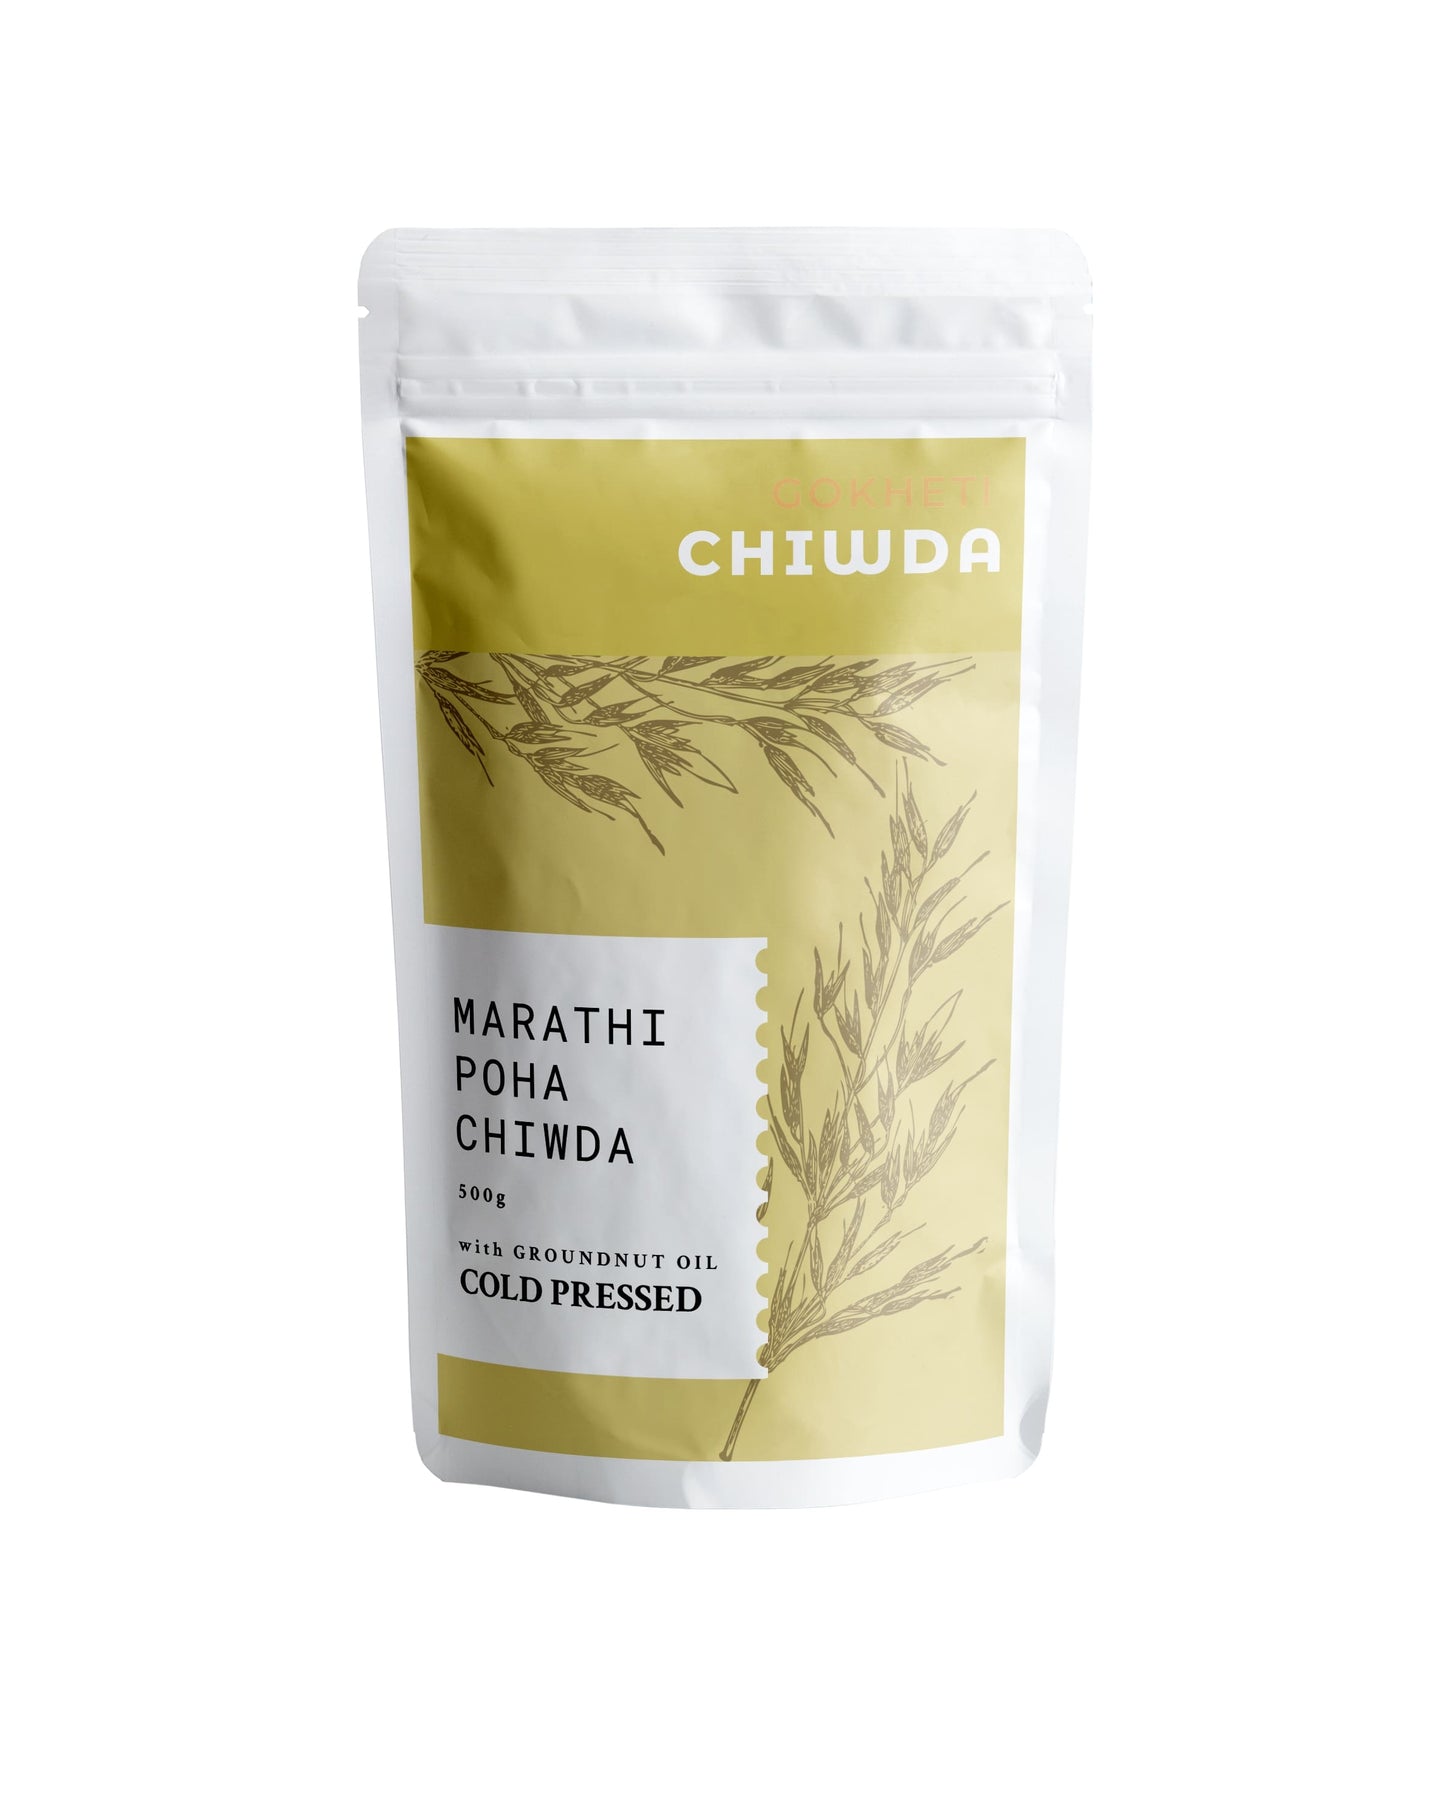 buy poha chiwda online